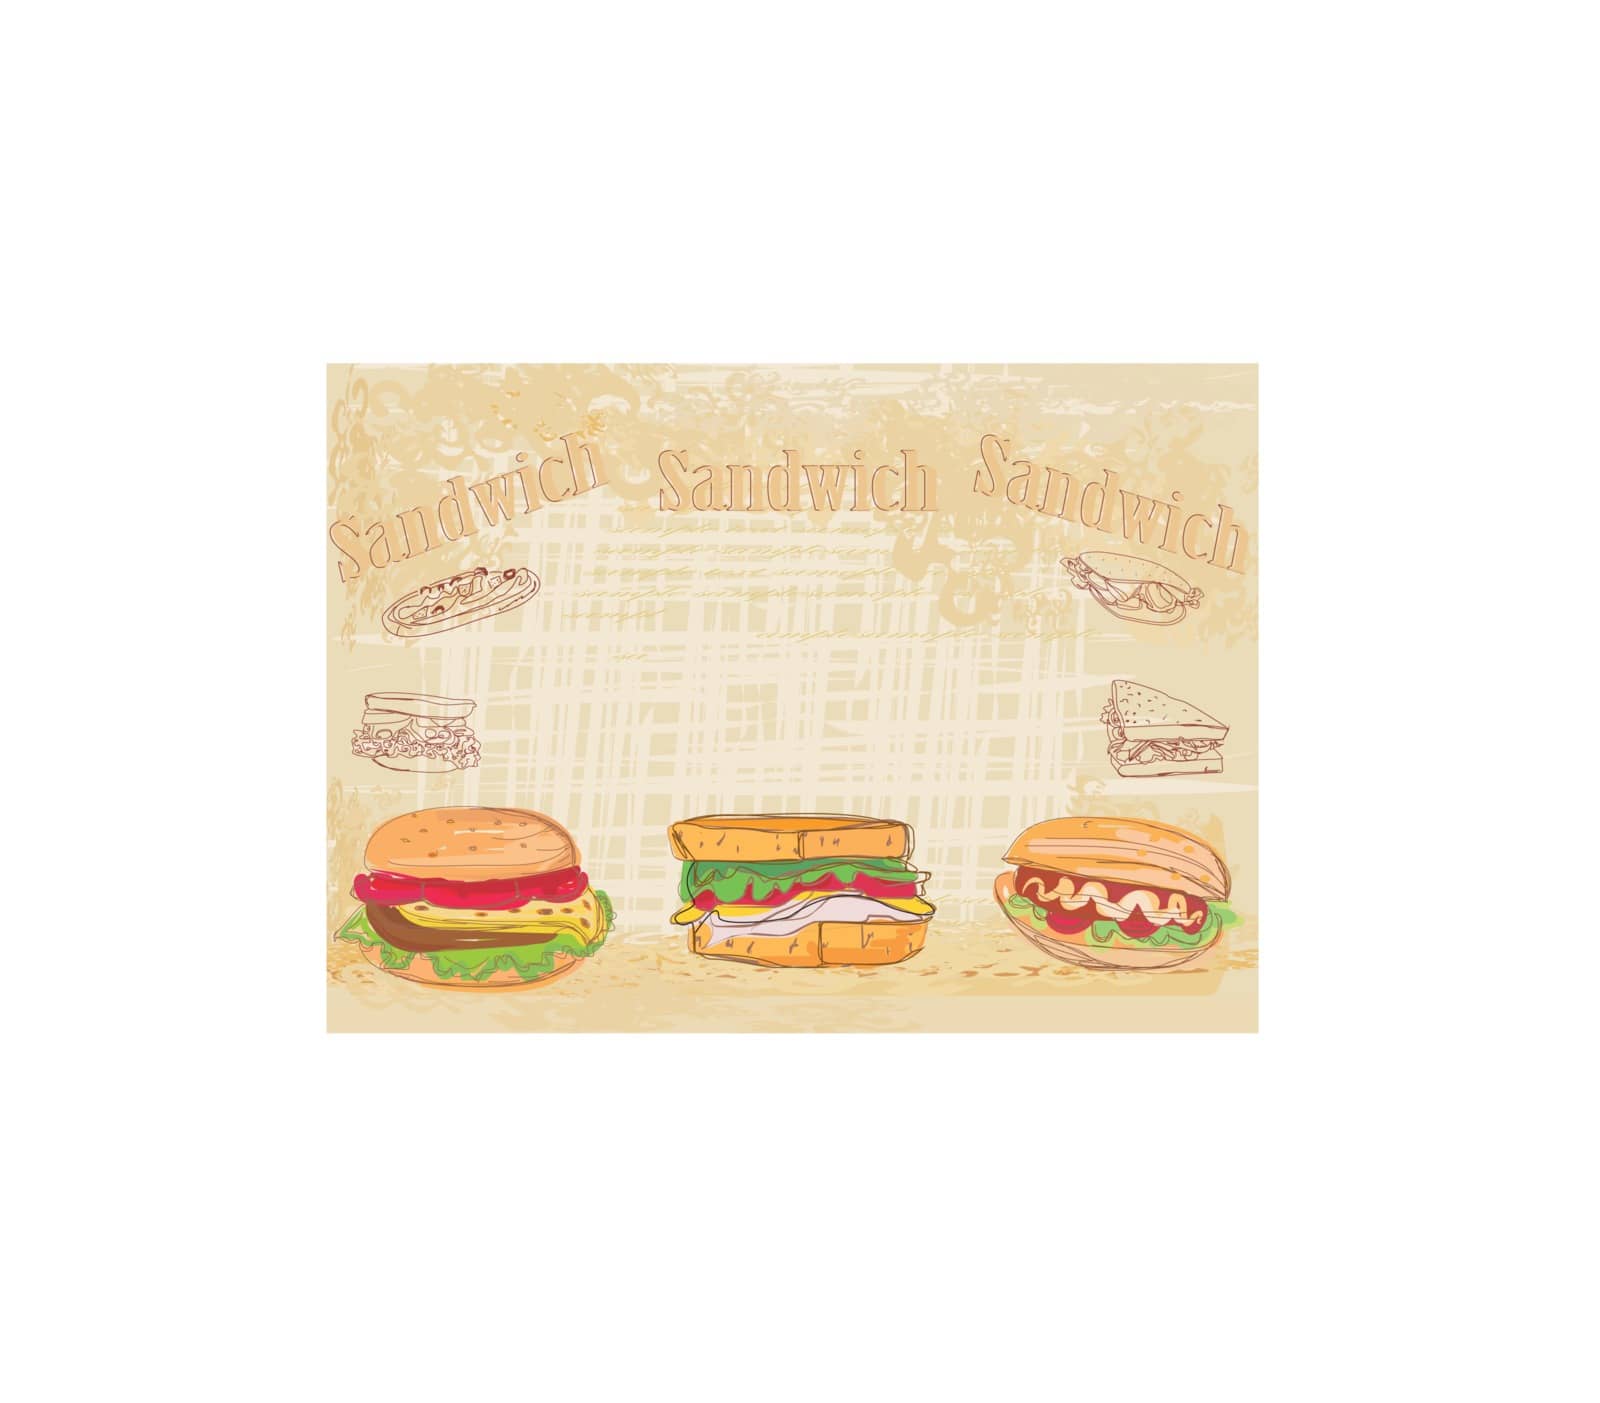 Horizontal grunge background with sandwich by JackyBrown